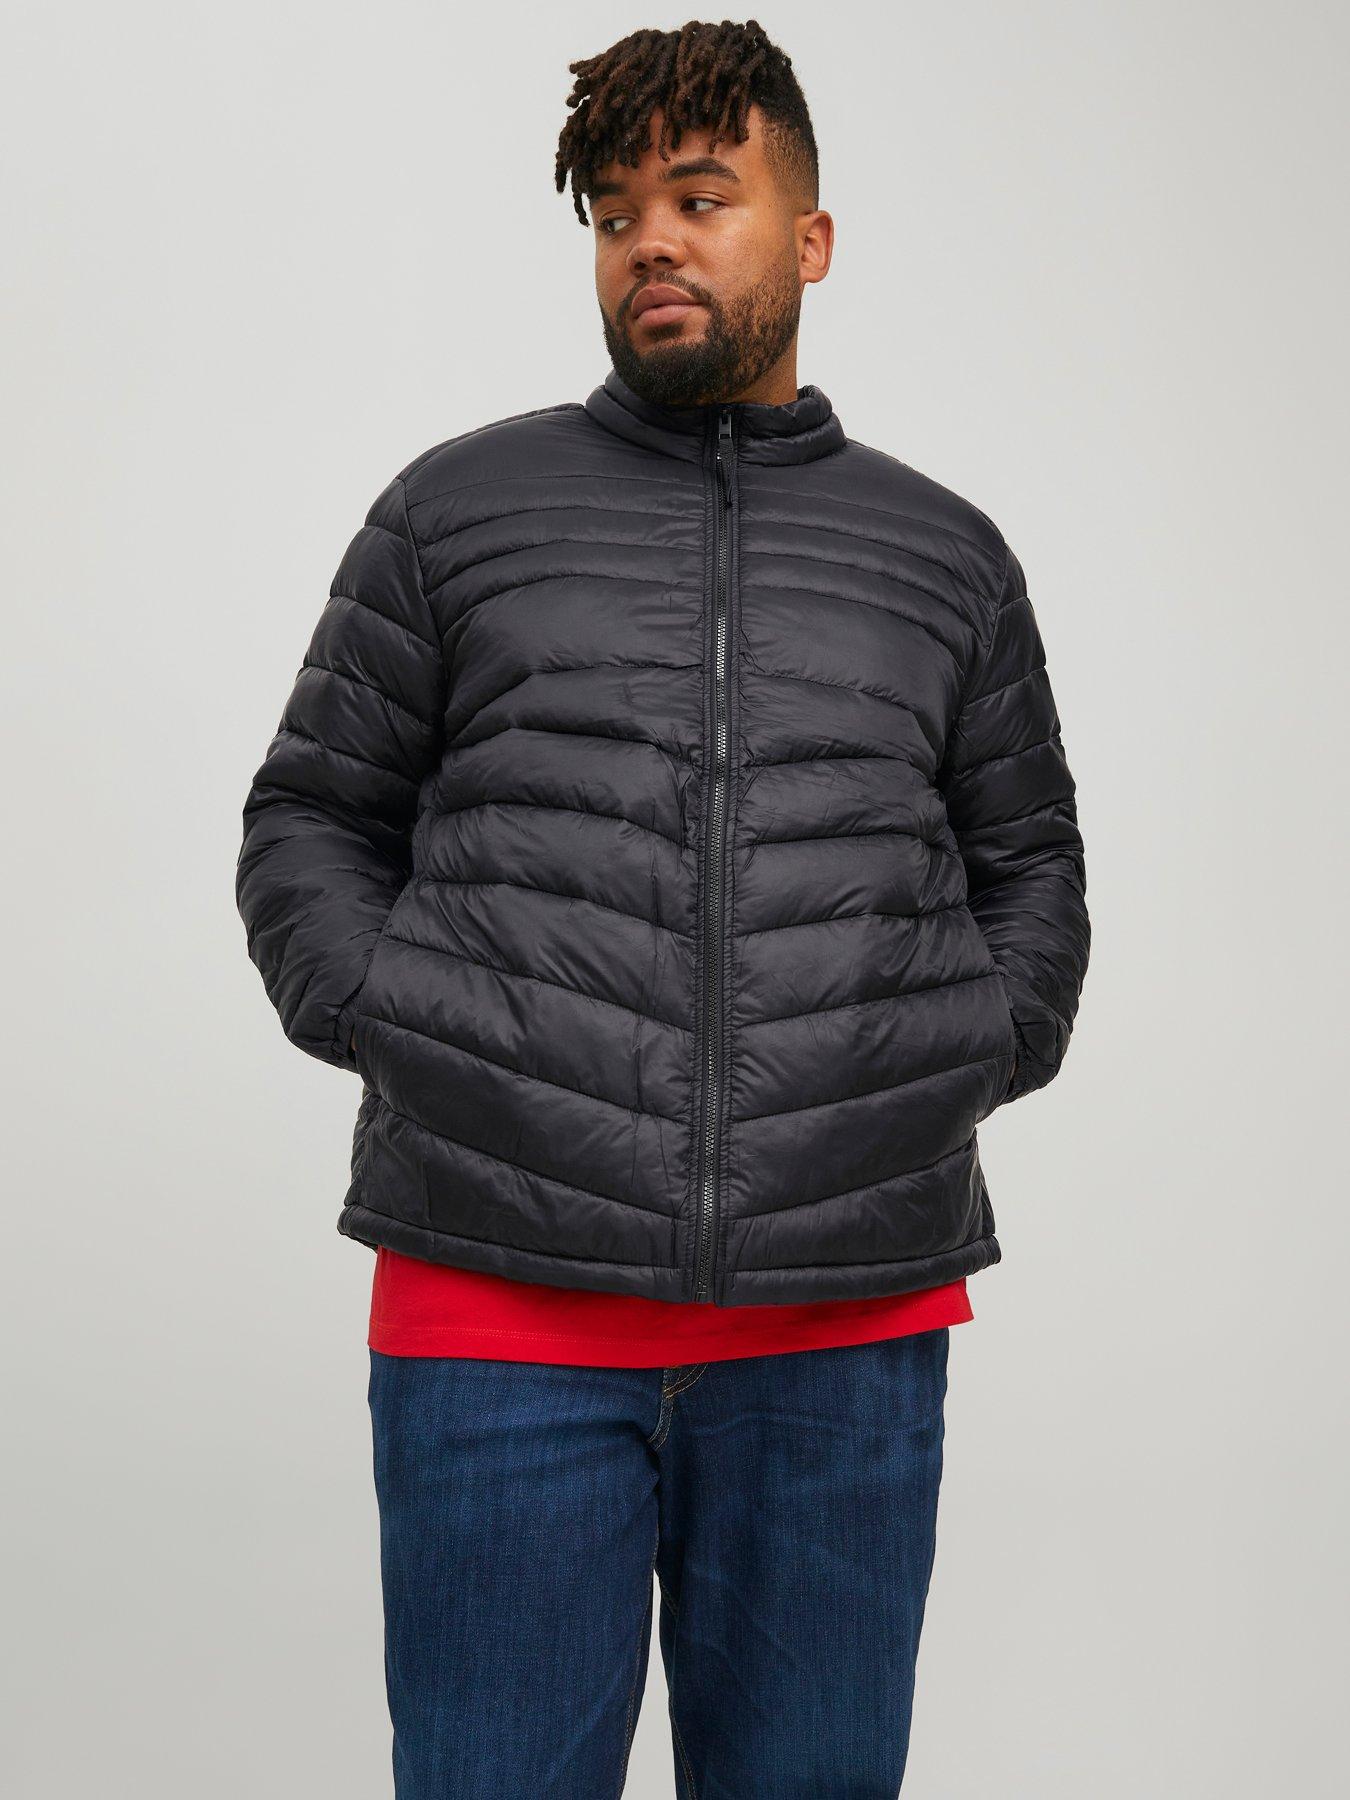 discount 71% Black M Jack & Jones light jacket MEN FASHION Jackets Sports 